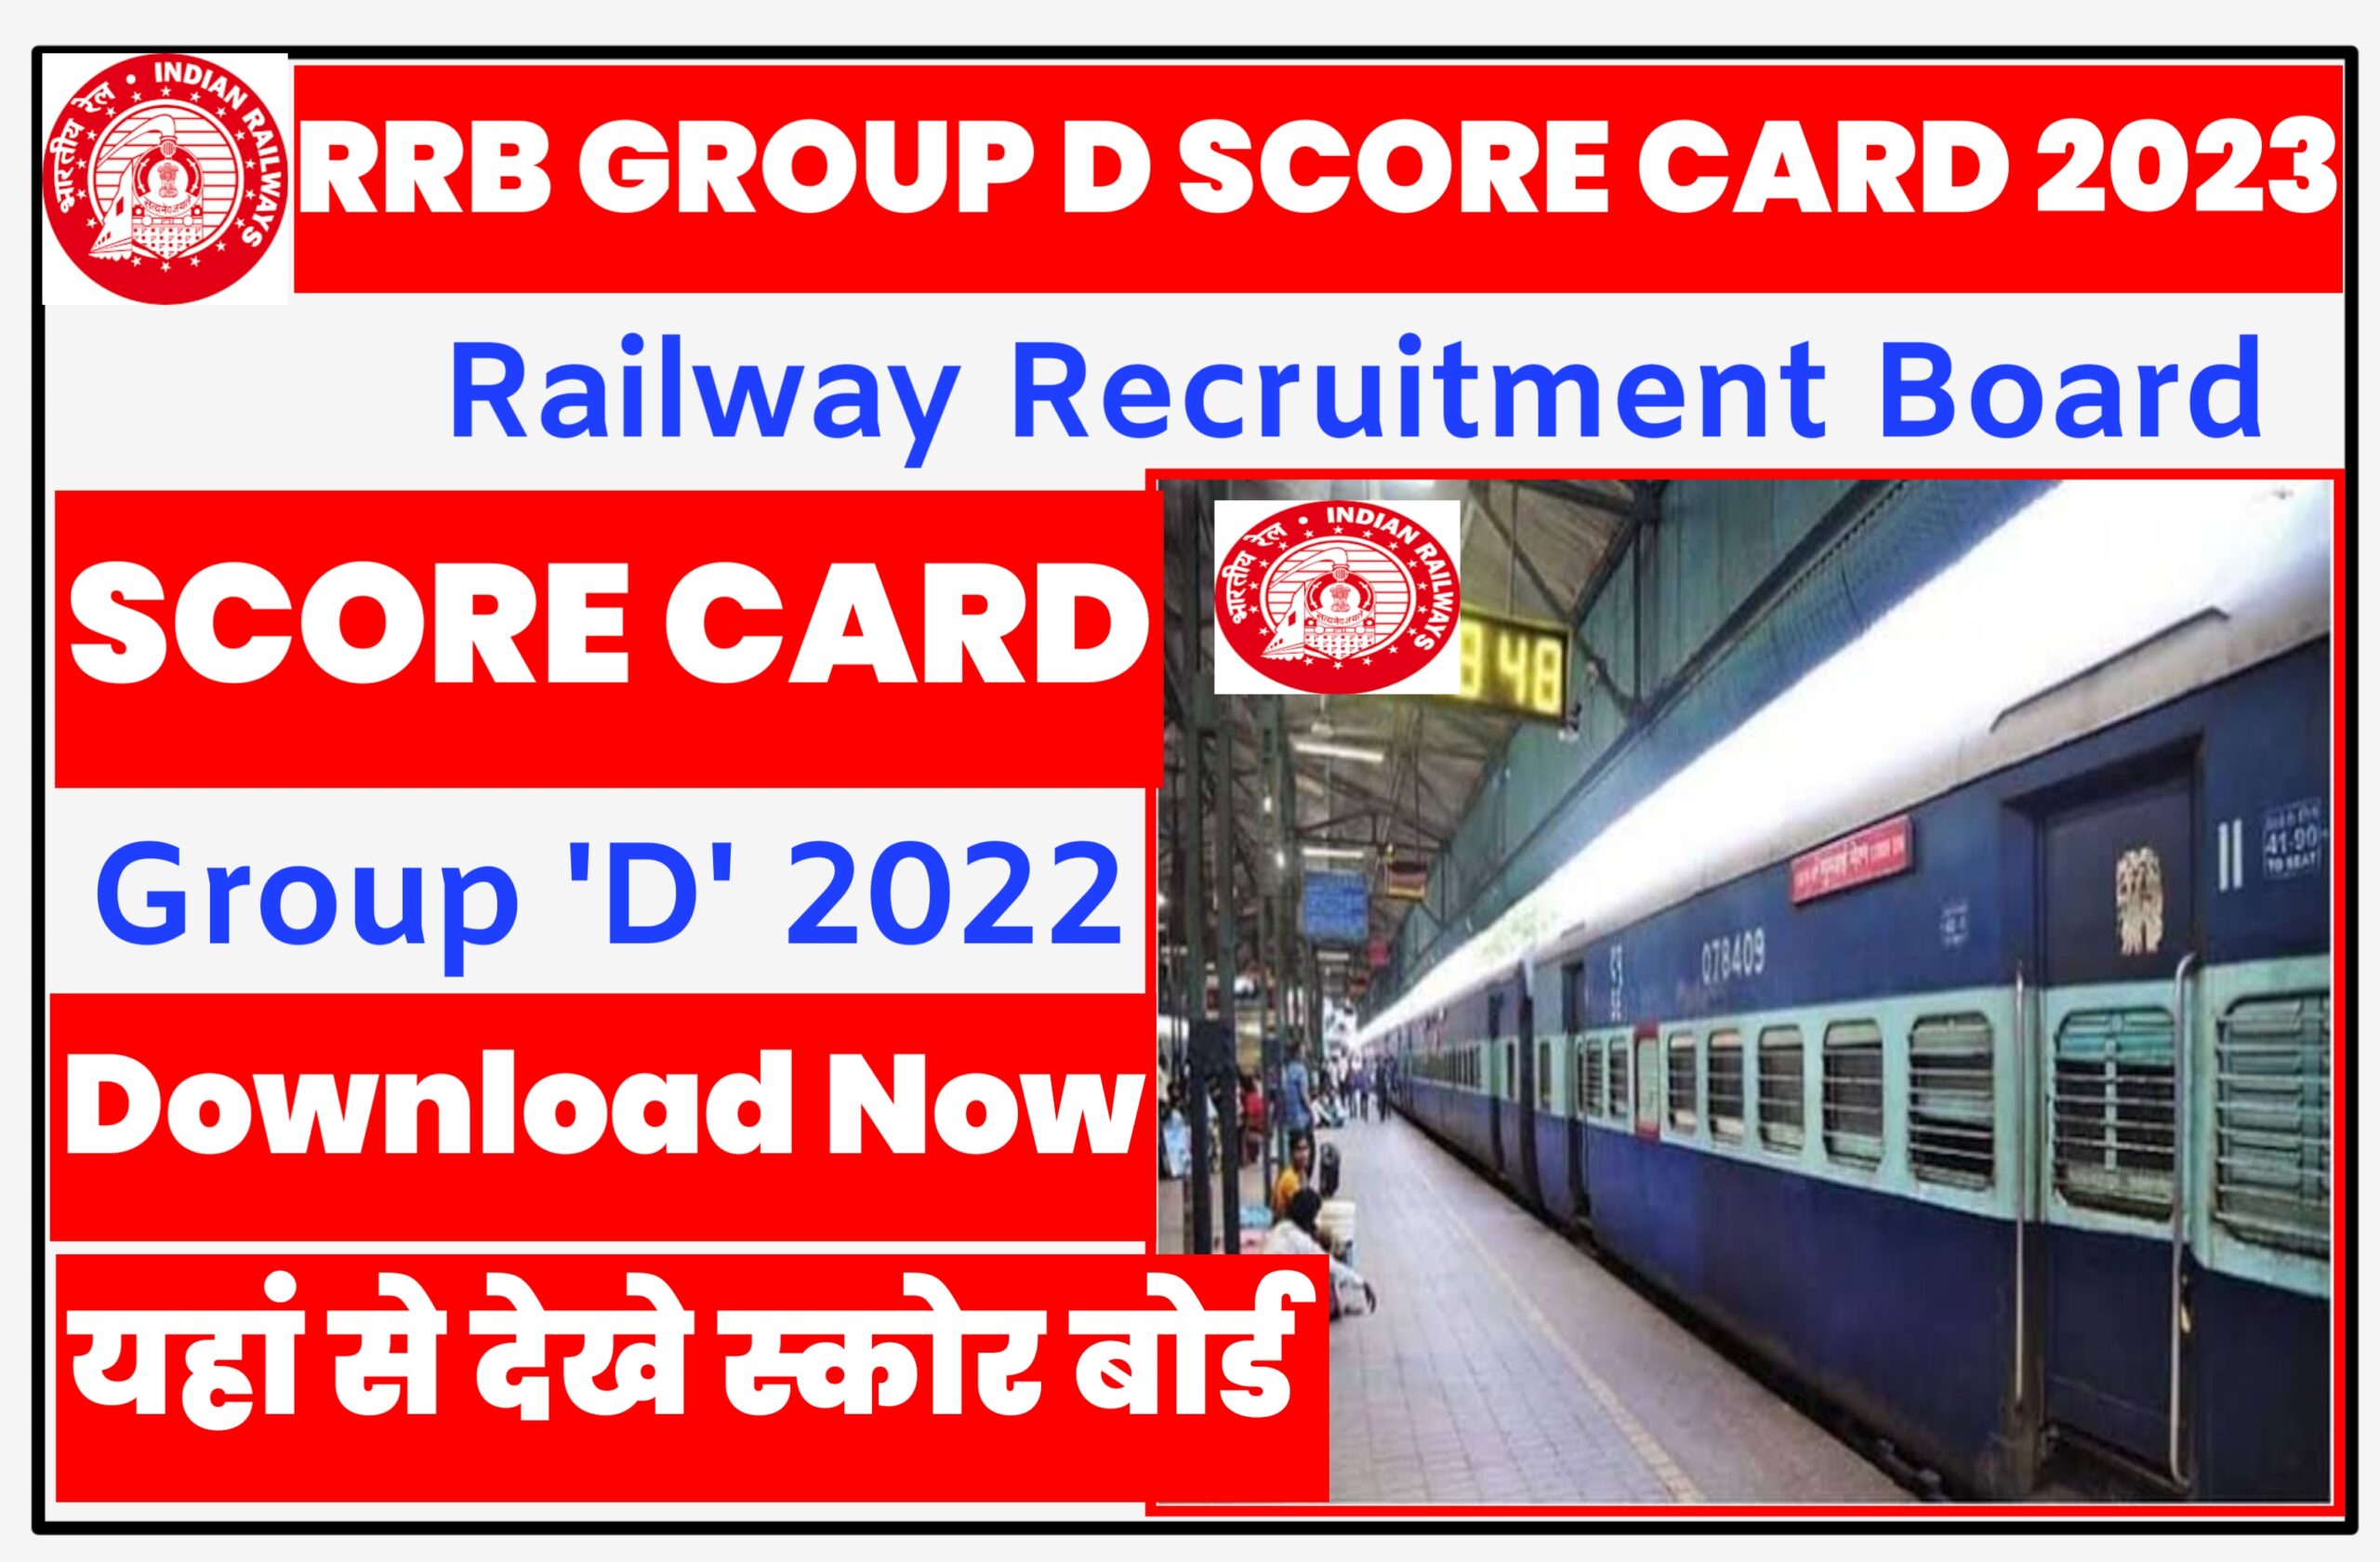 RRB Group D Score Card 2023